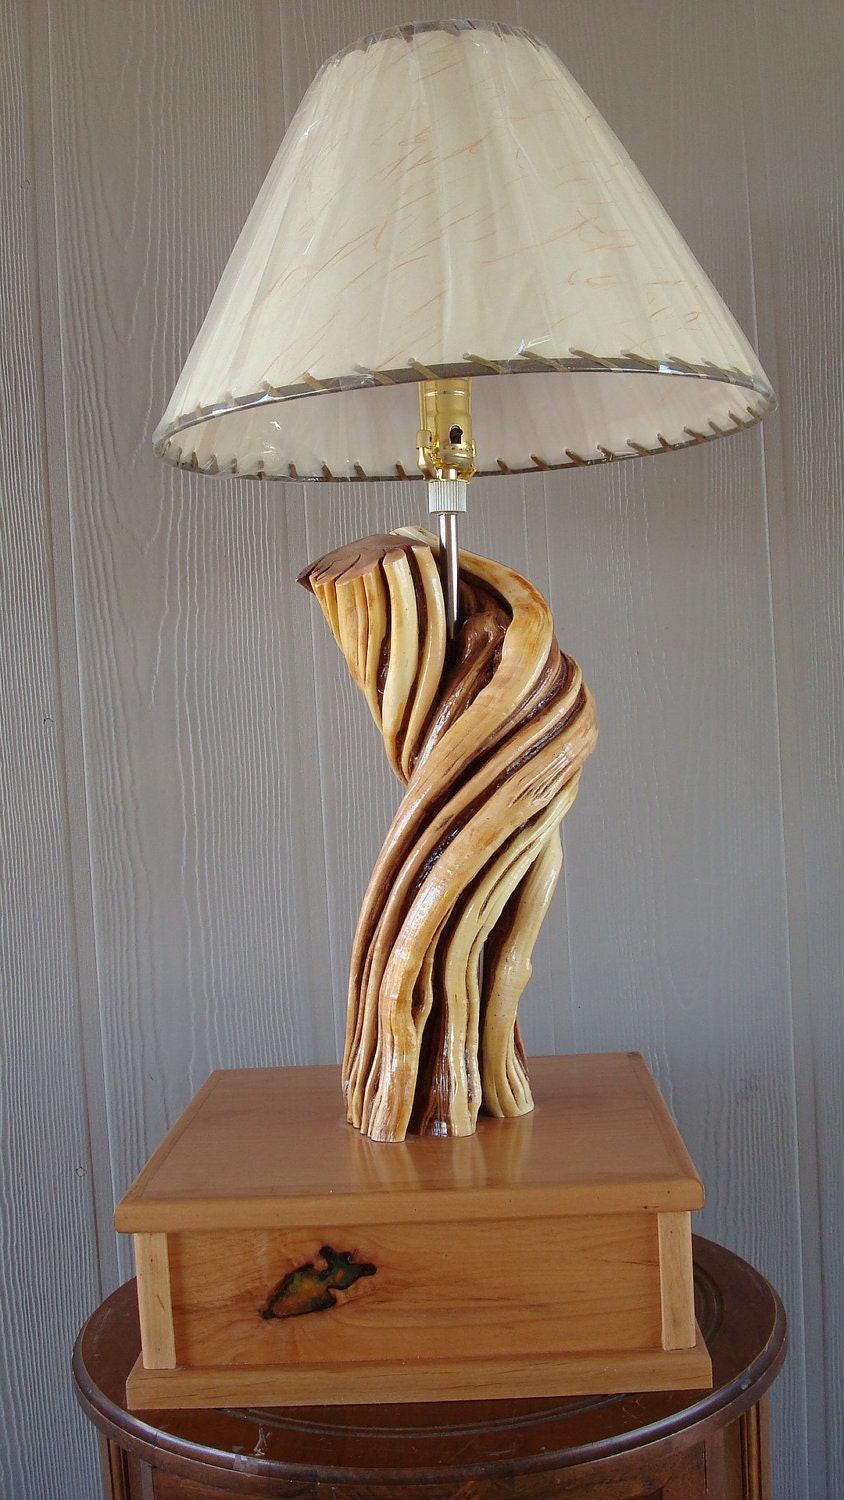 Cedar lamp with night light base by NaturalIlluminations on Etsy